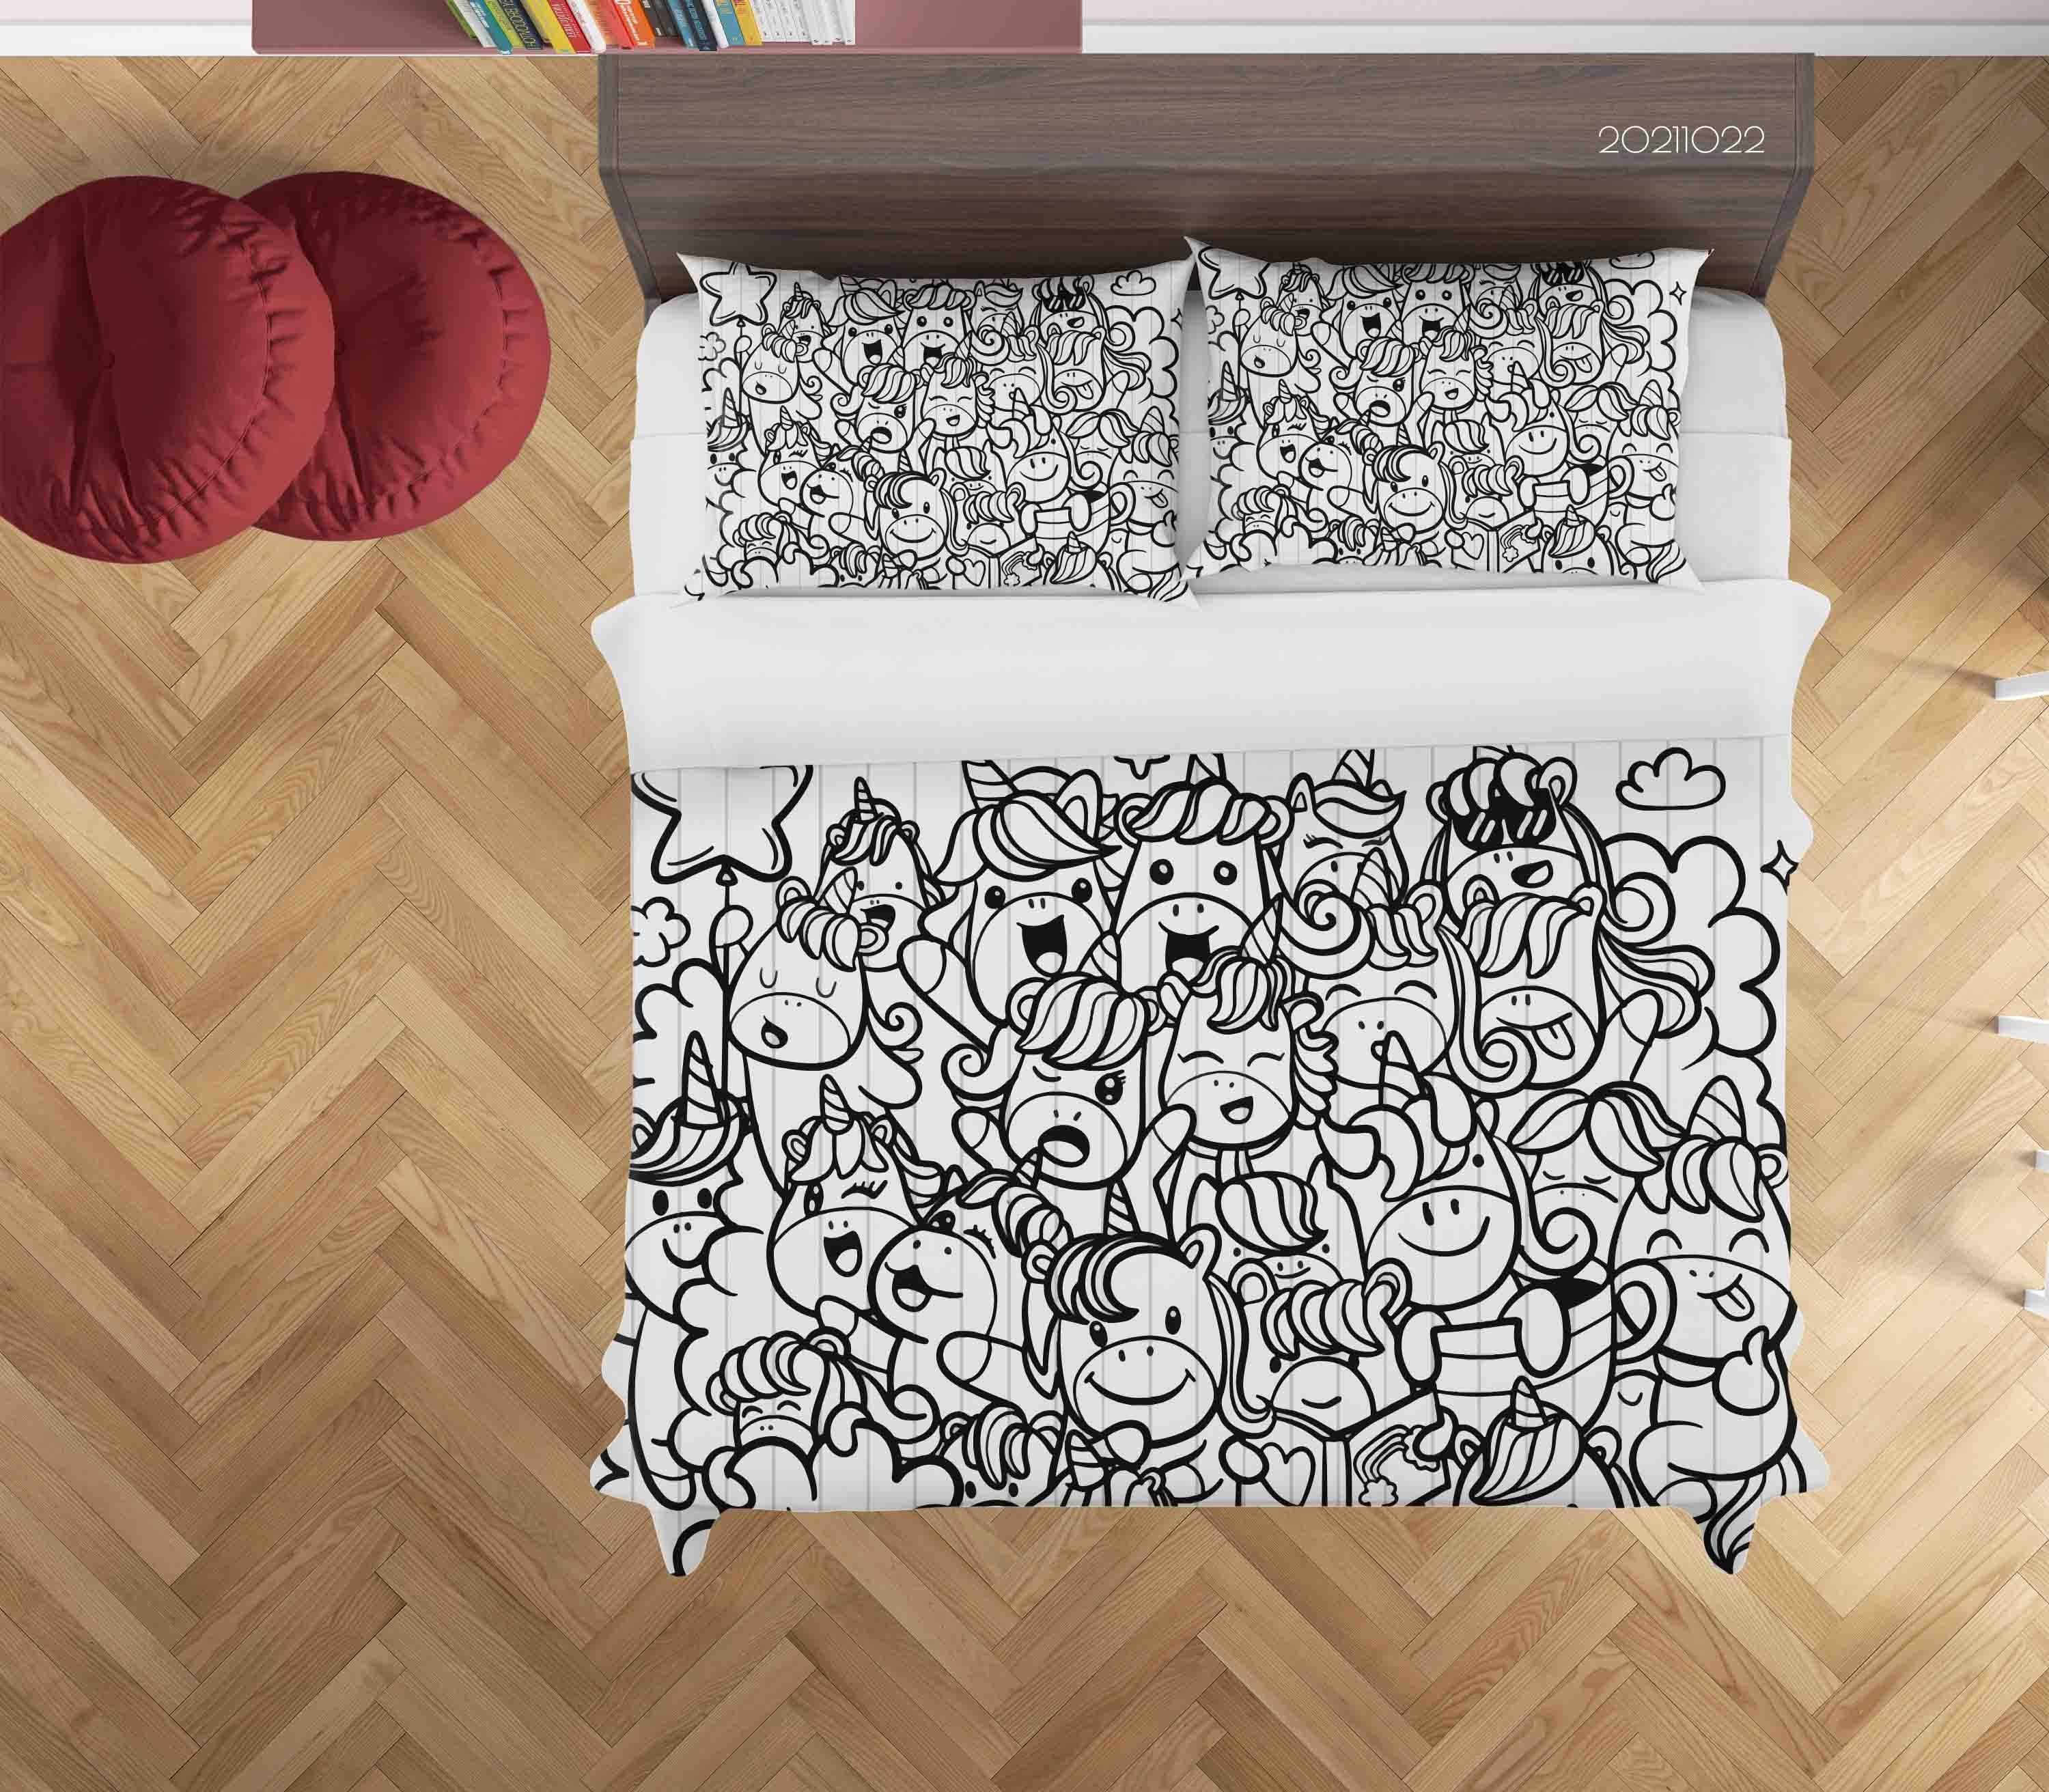 3D Abstract Animal Unicorn Graffiti Quilt Cover Set Bedding Set Duvet Cover Pillowcases 22- Jess Art Decoration